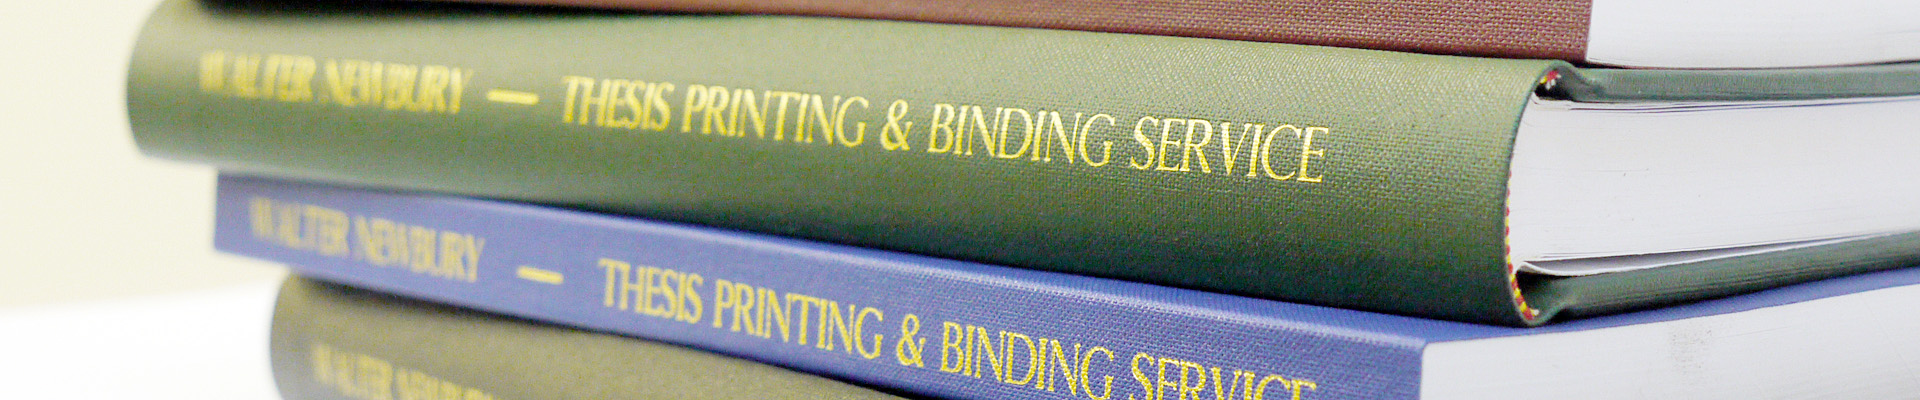 thesis binding business